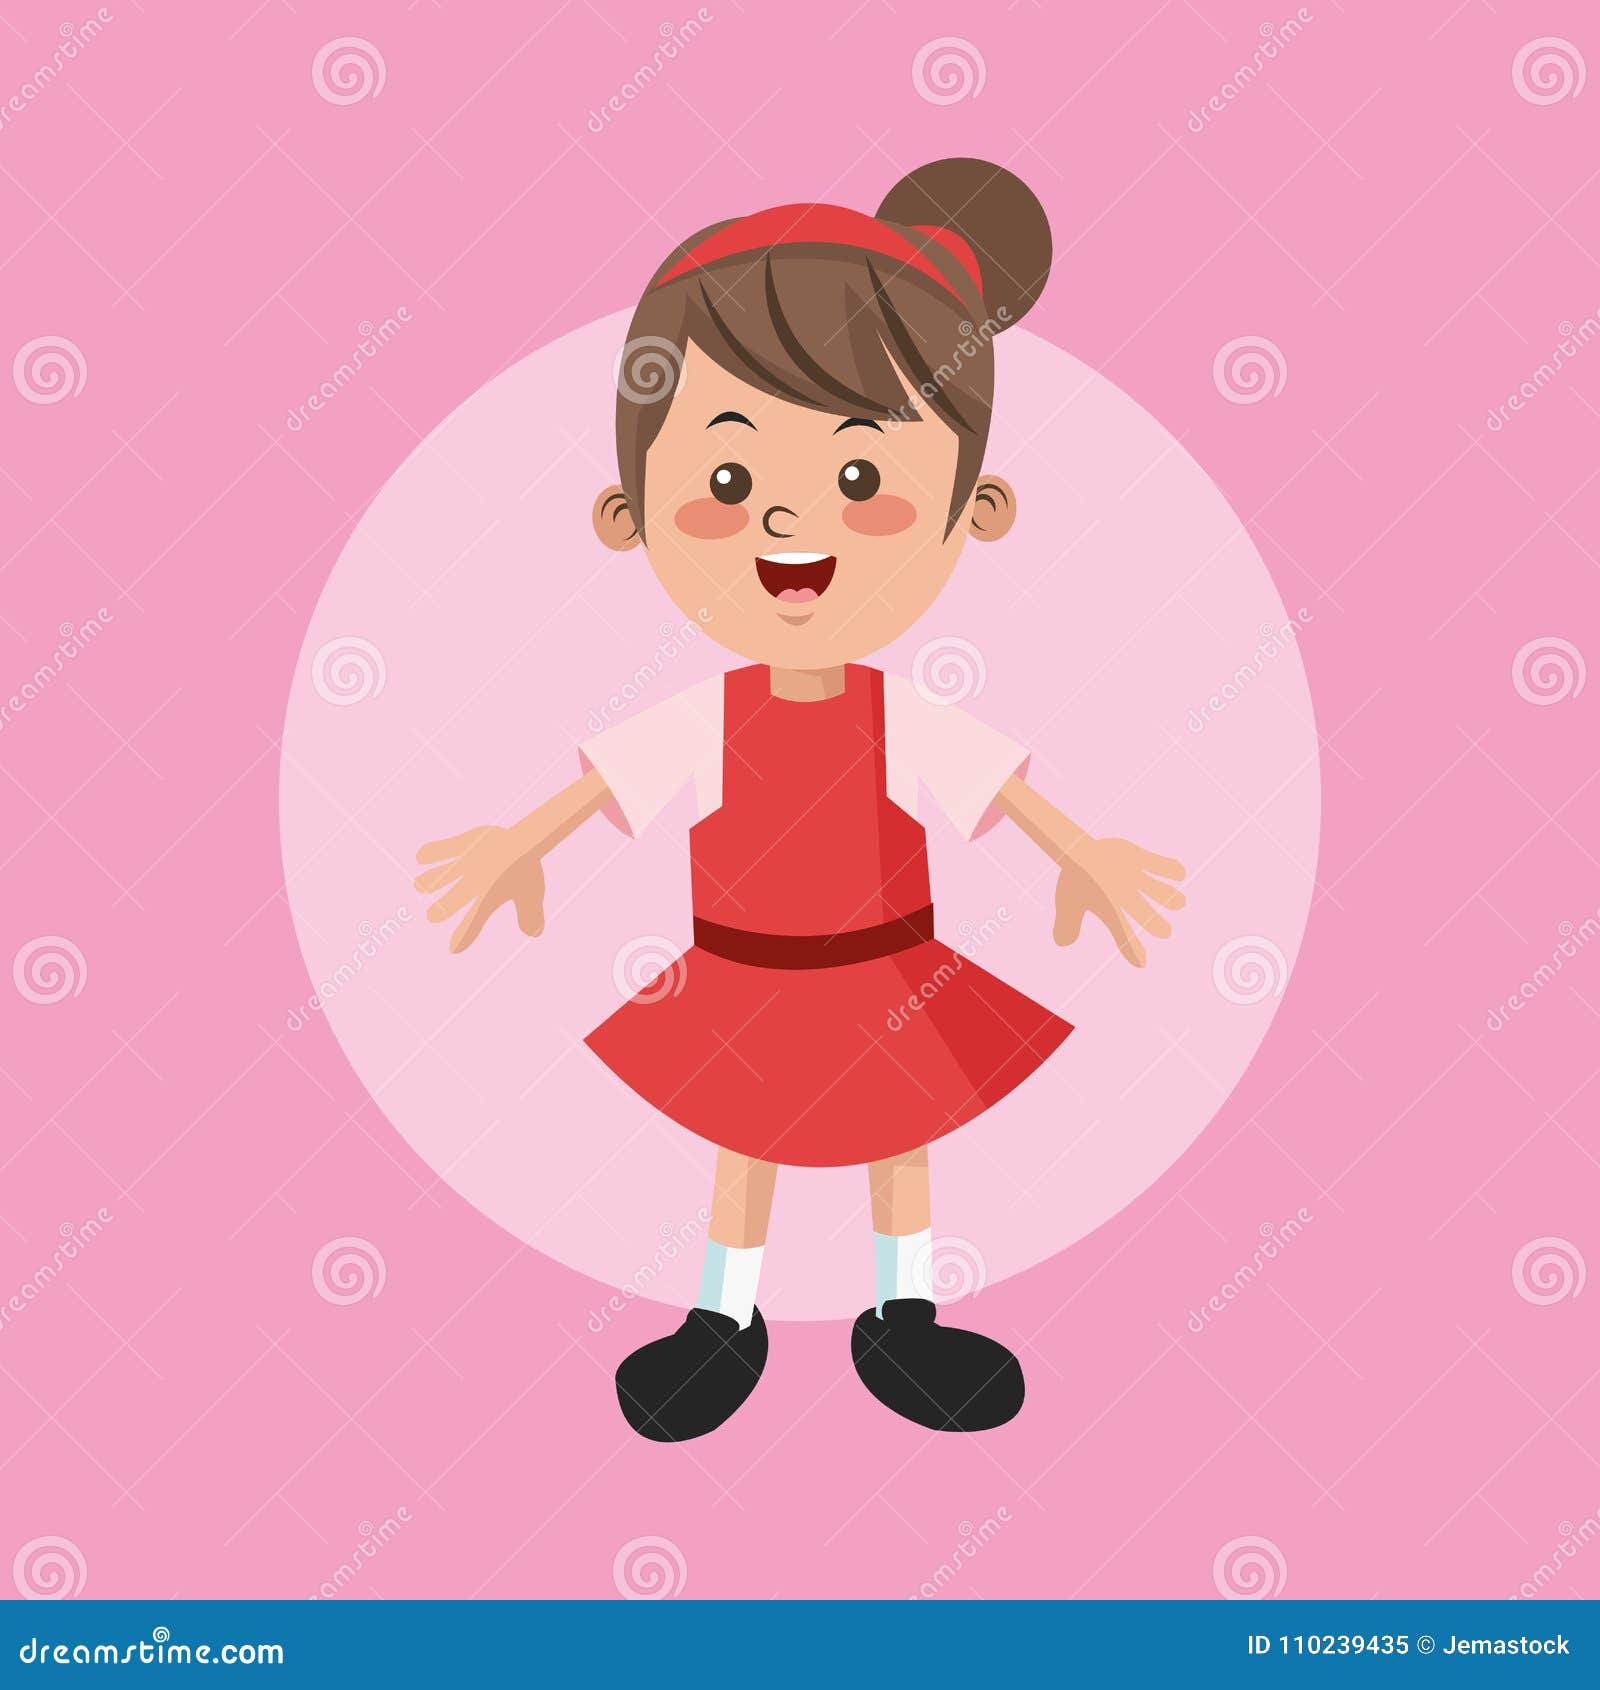 Girl kid cartoon design stock vector. Illustration of together - 110239435